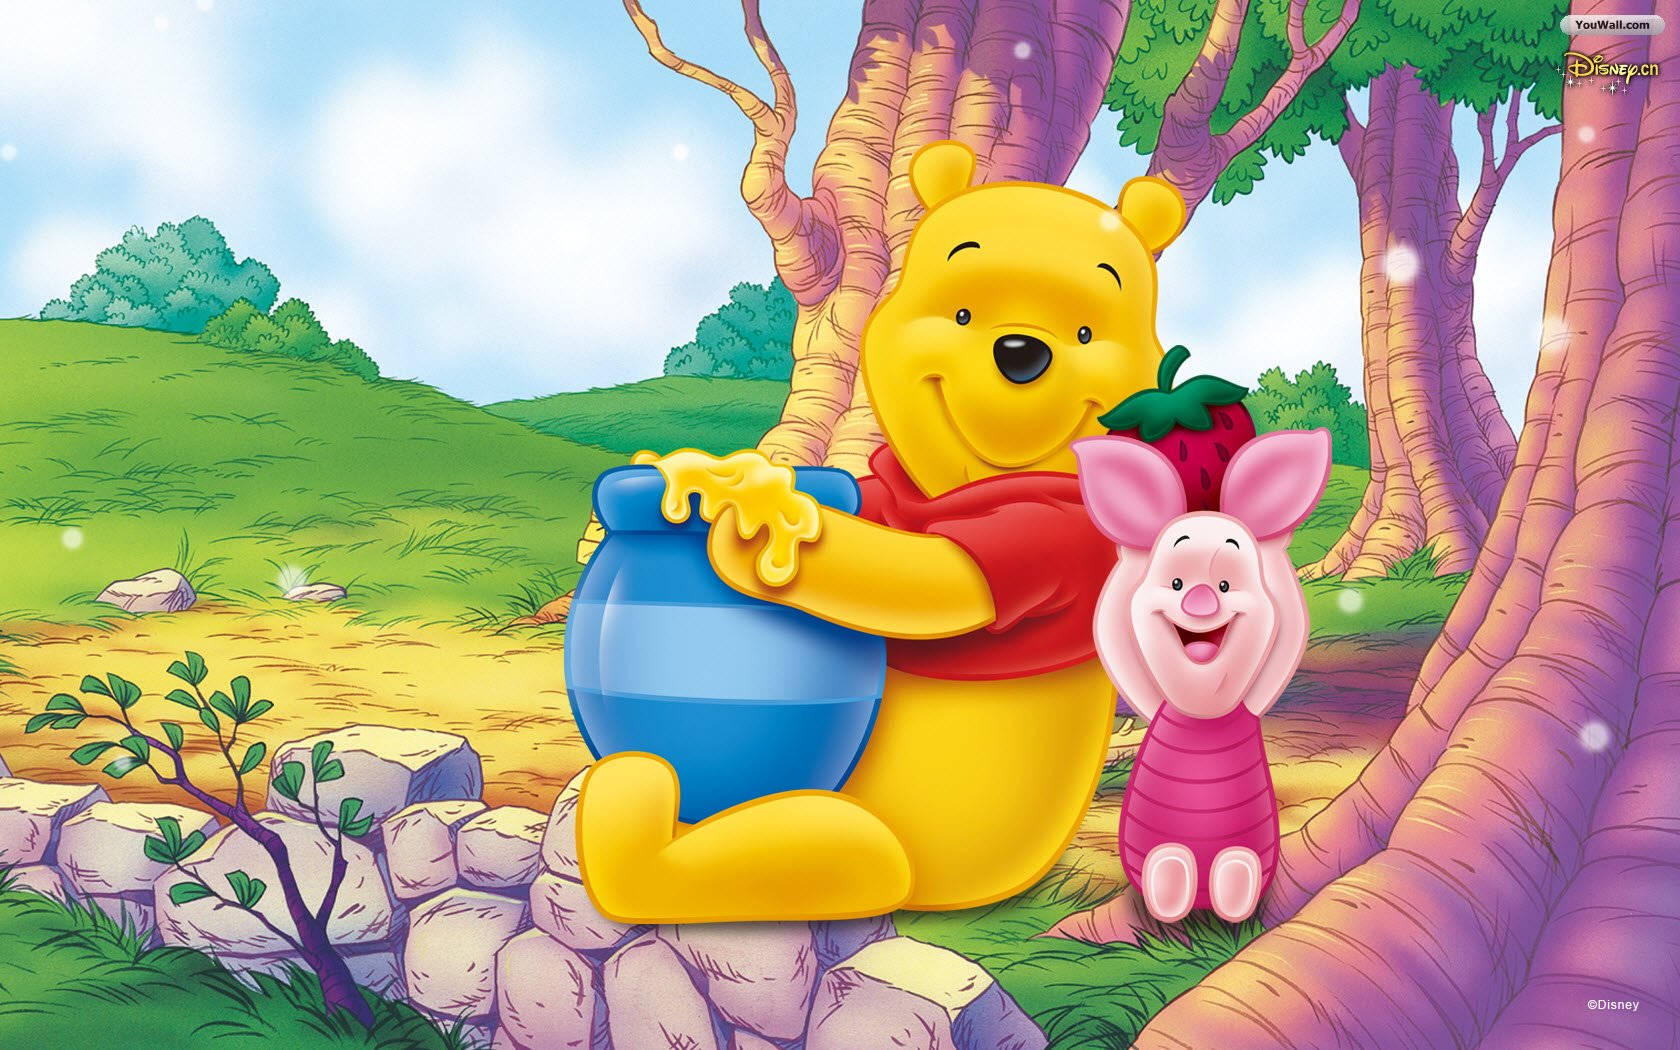 Winnie The Pooh Iphone Display Background